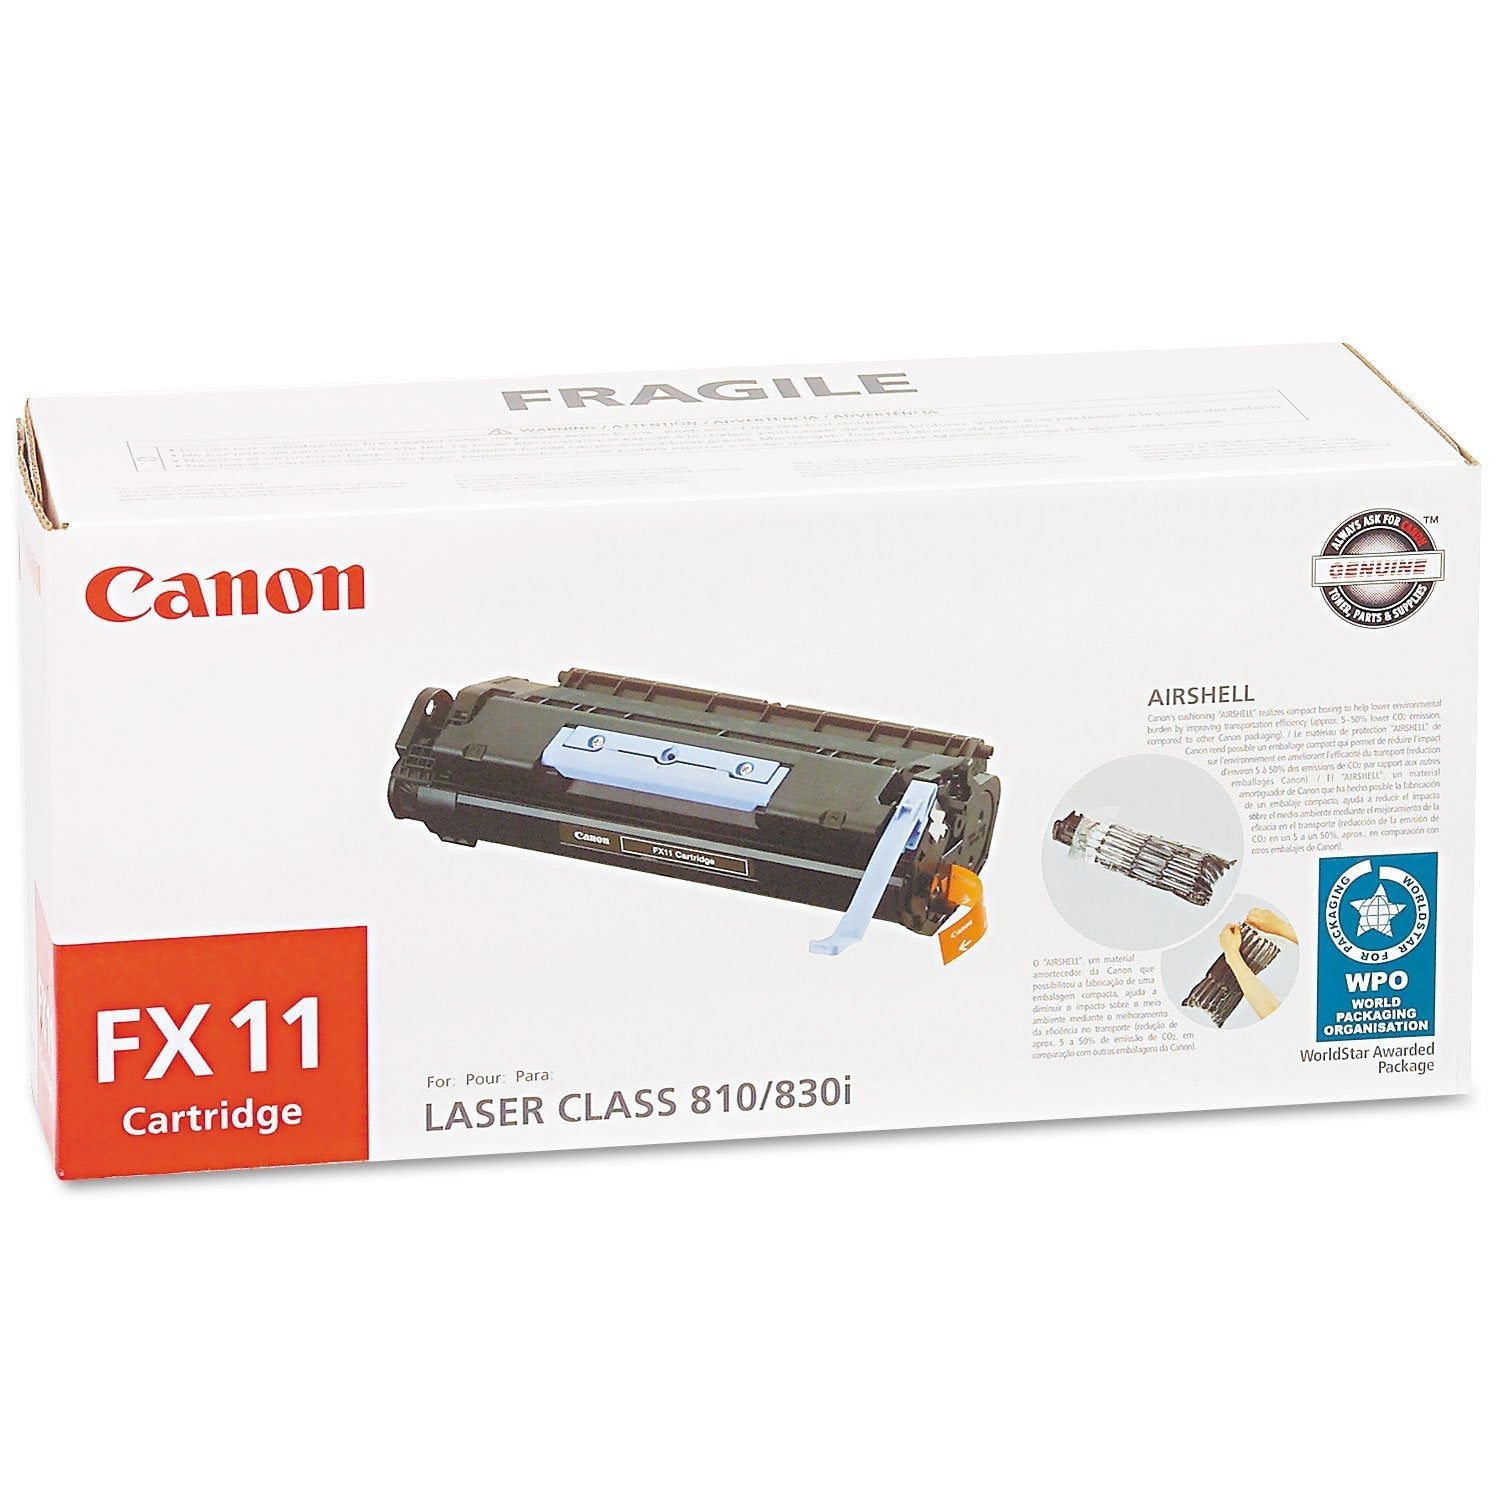 Absolute Toner Canon FX11 Genuine OEM 1153B001AA Black Toner Cartridge Original Canon Cartridges